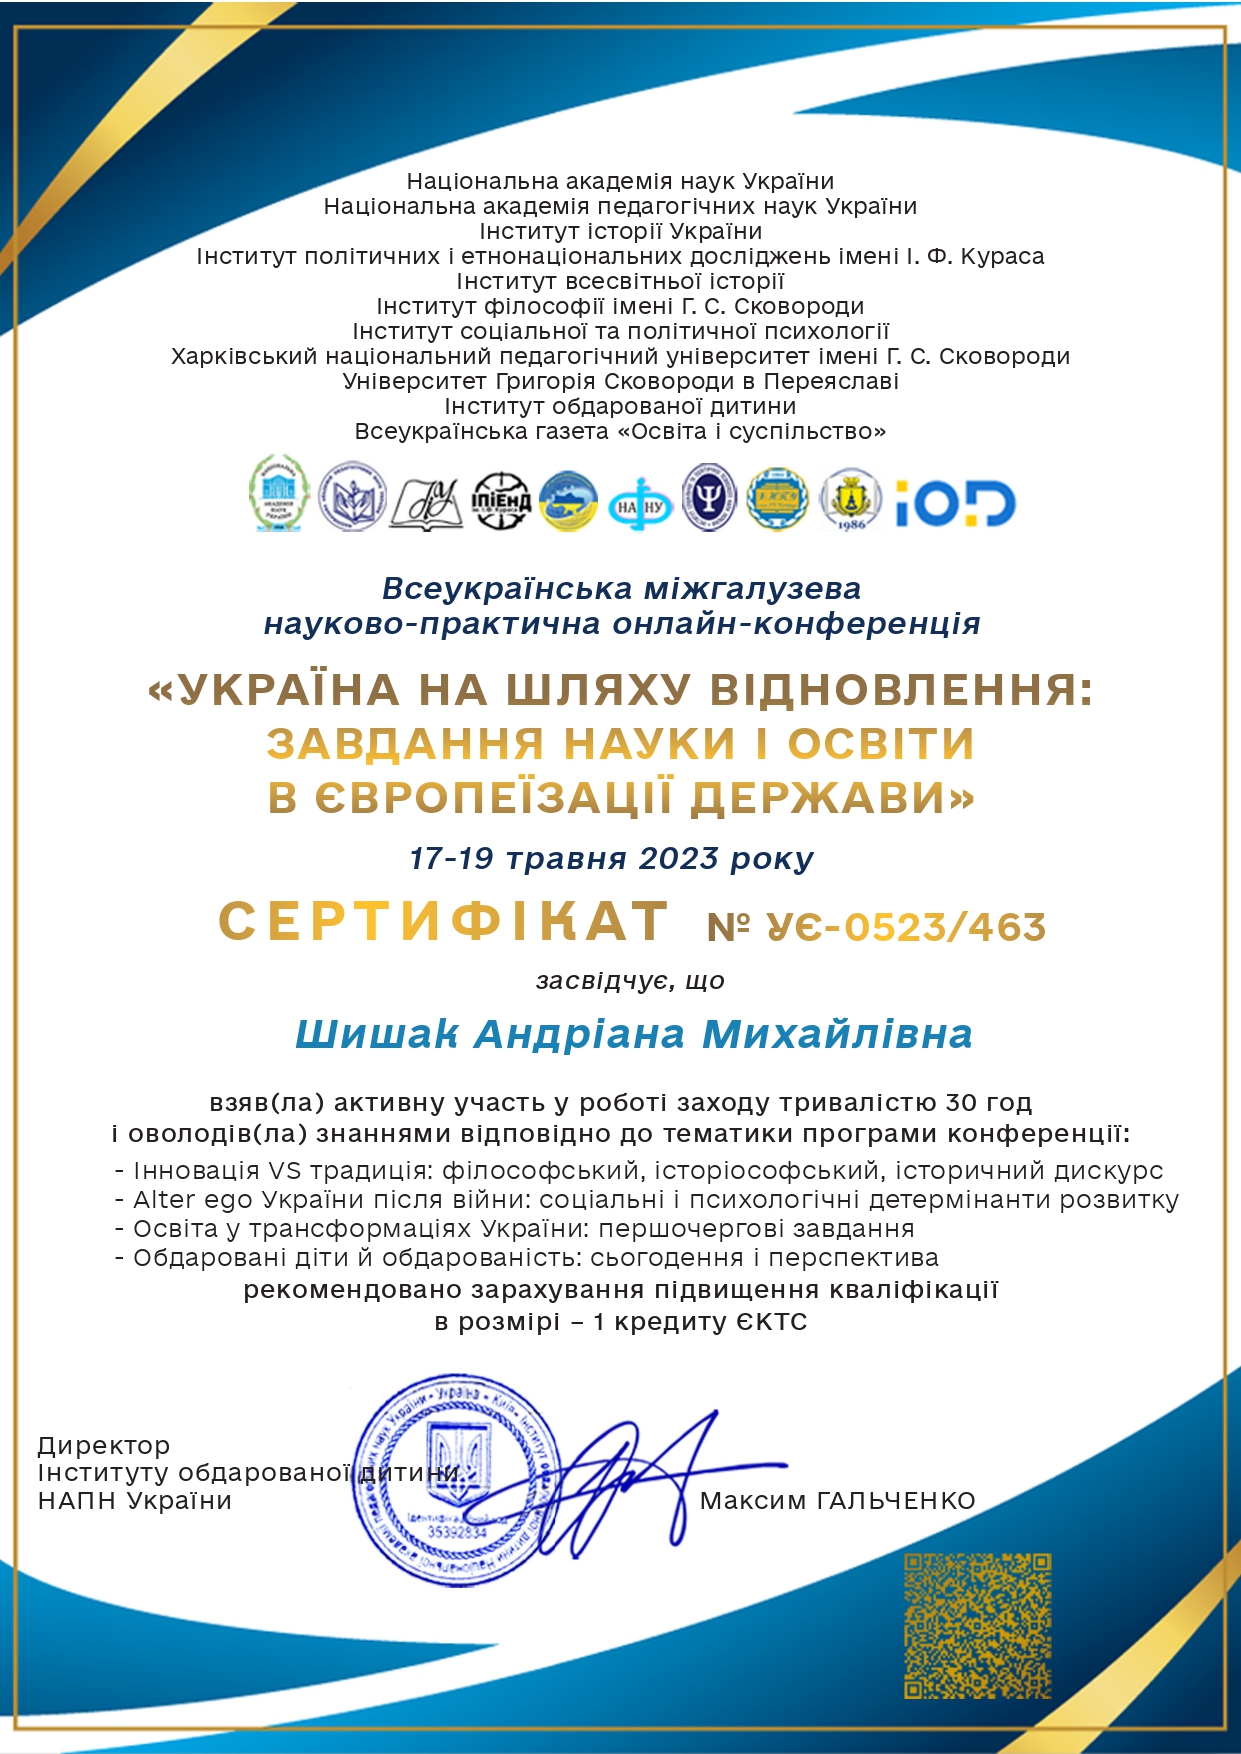 Сертифікат ІОД НАПН України